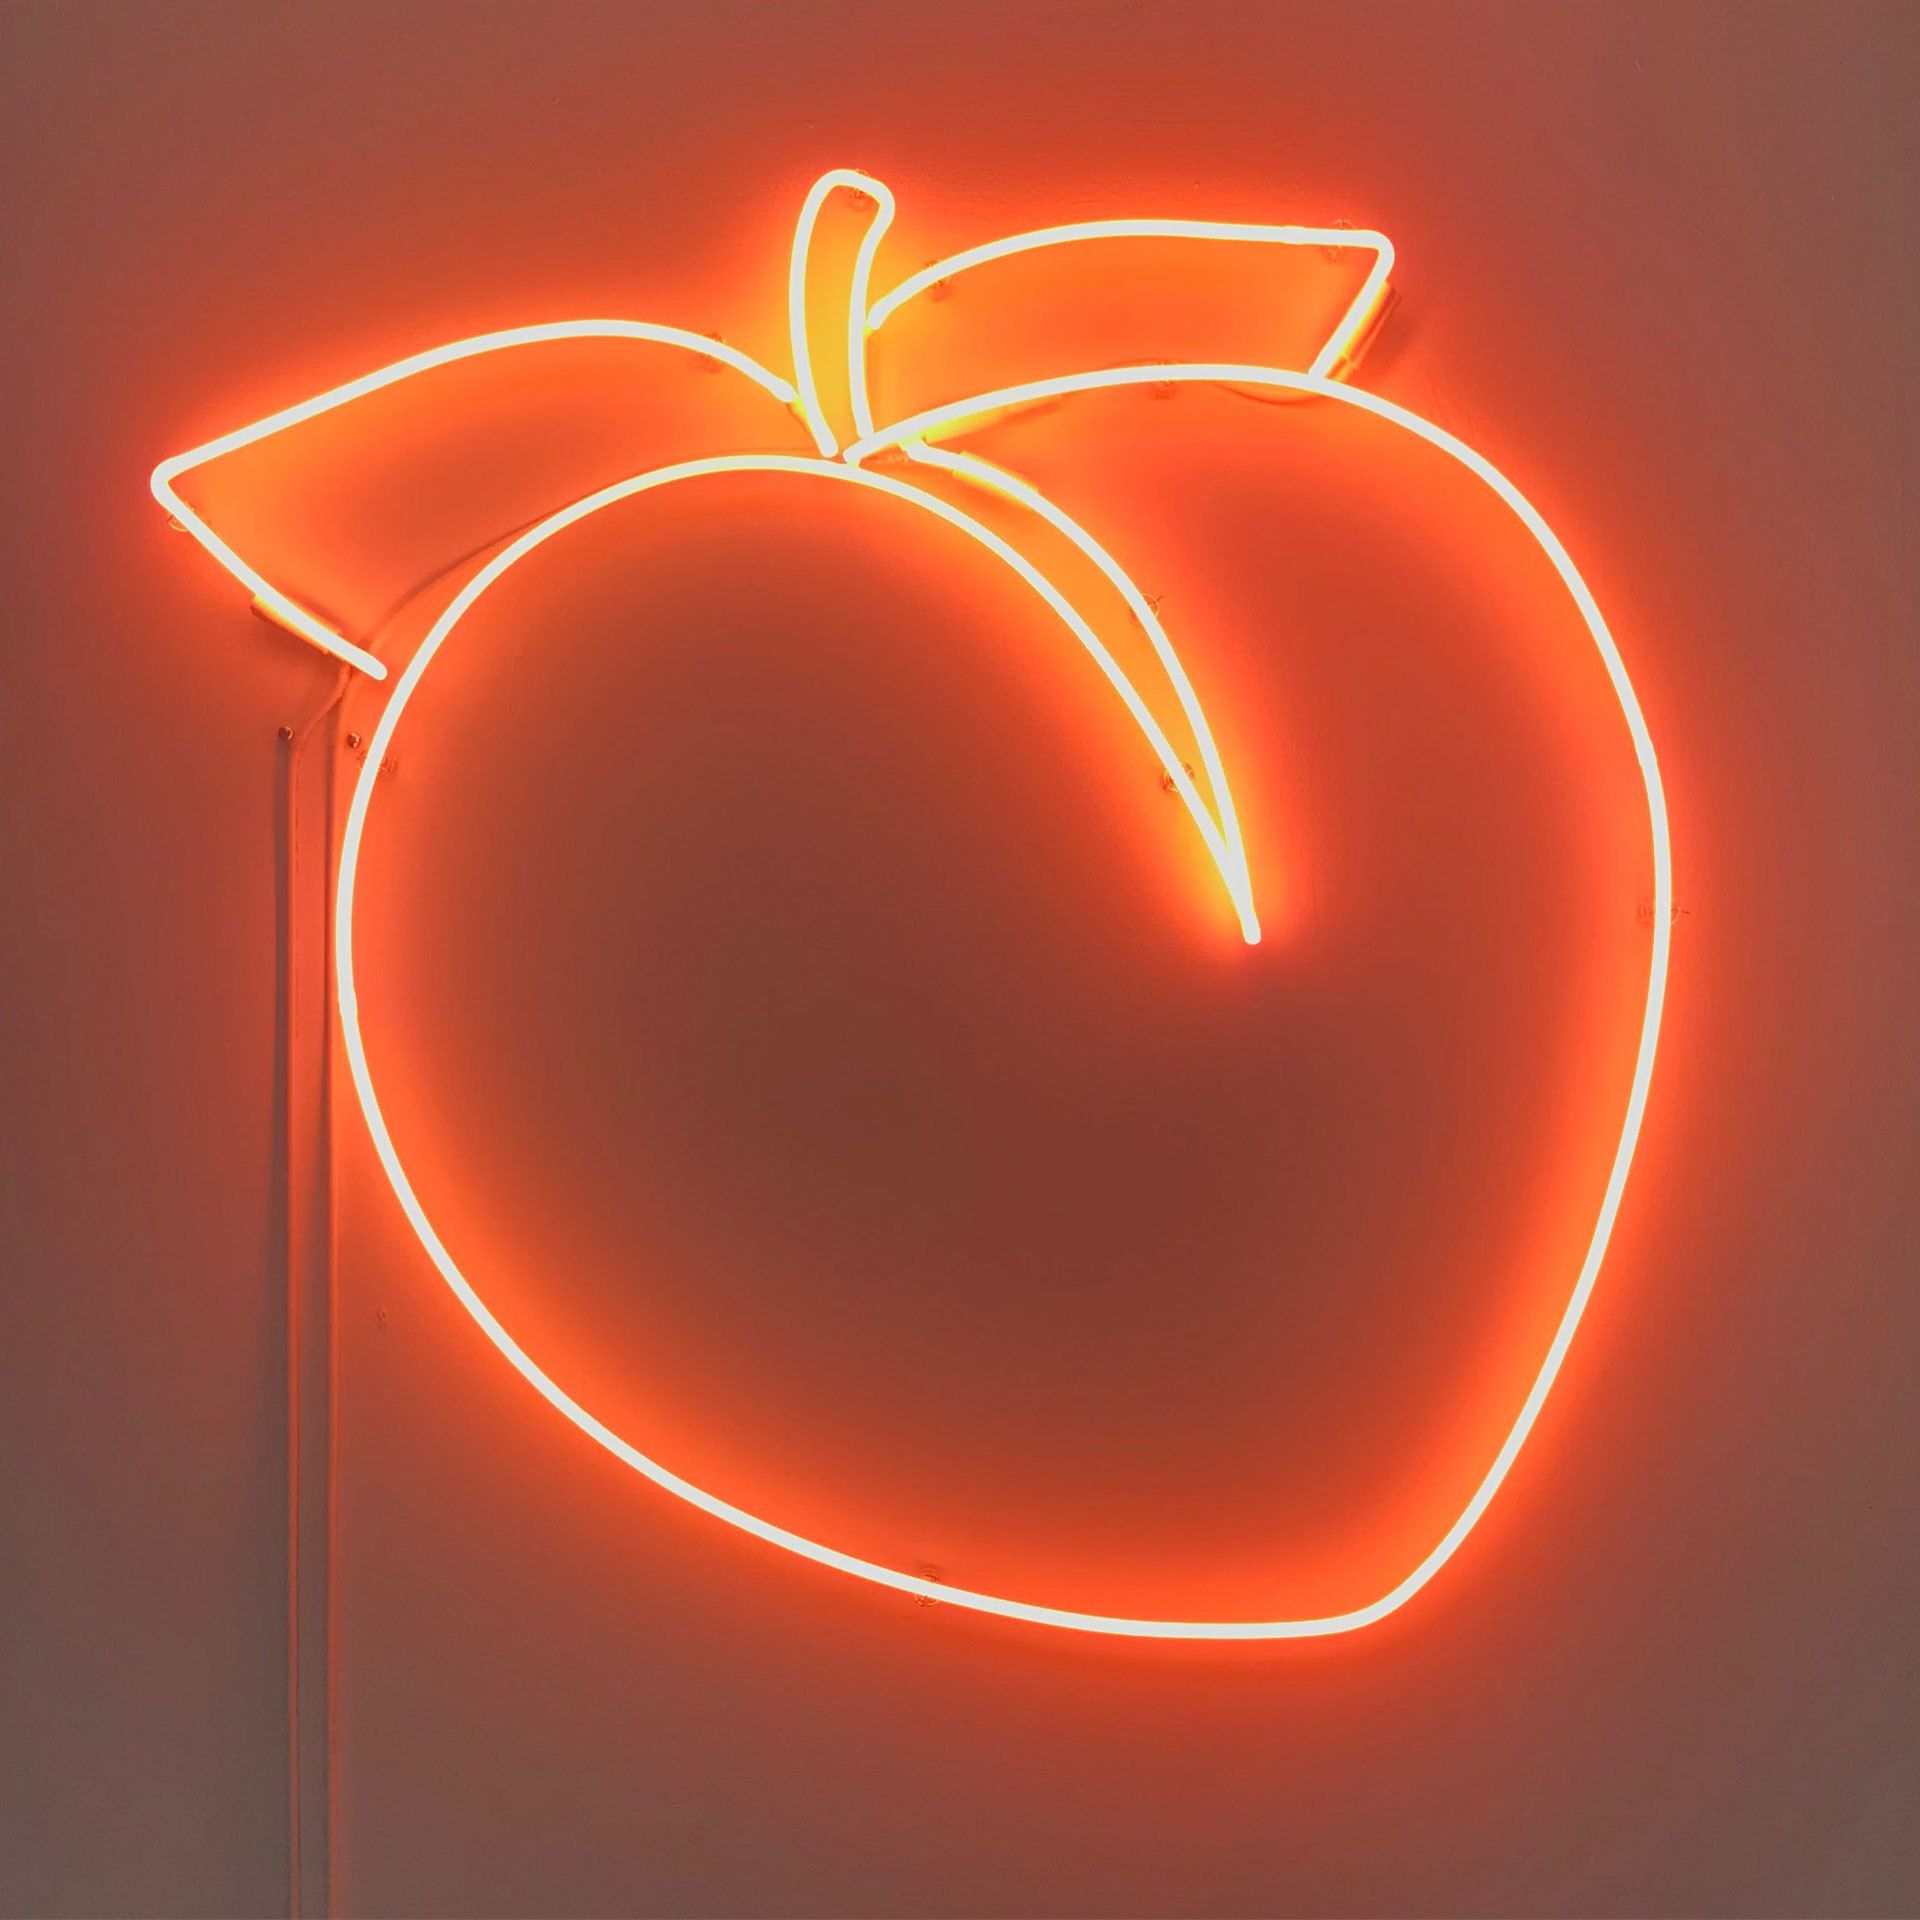 A neon light with an orange peach on it - Neon orange